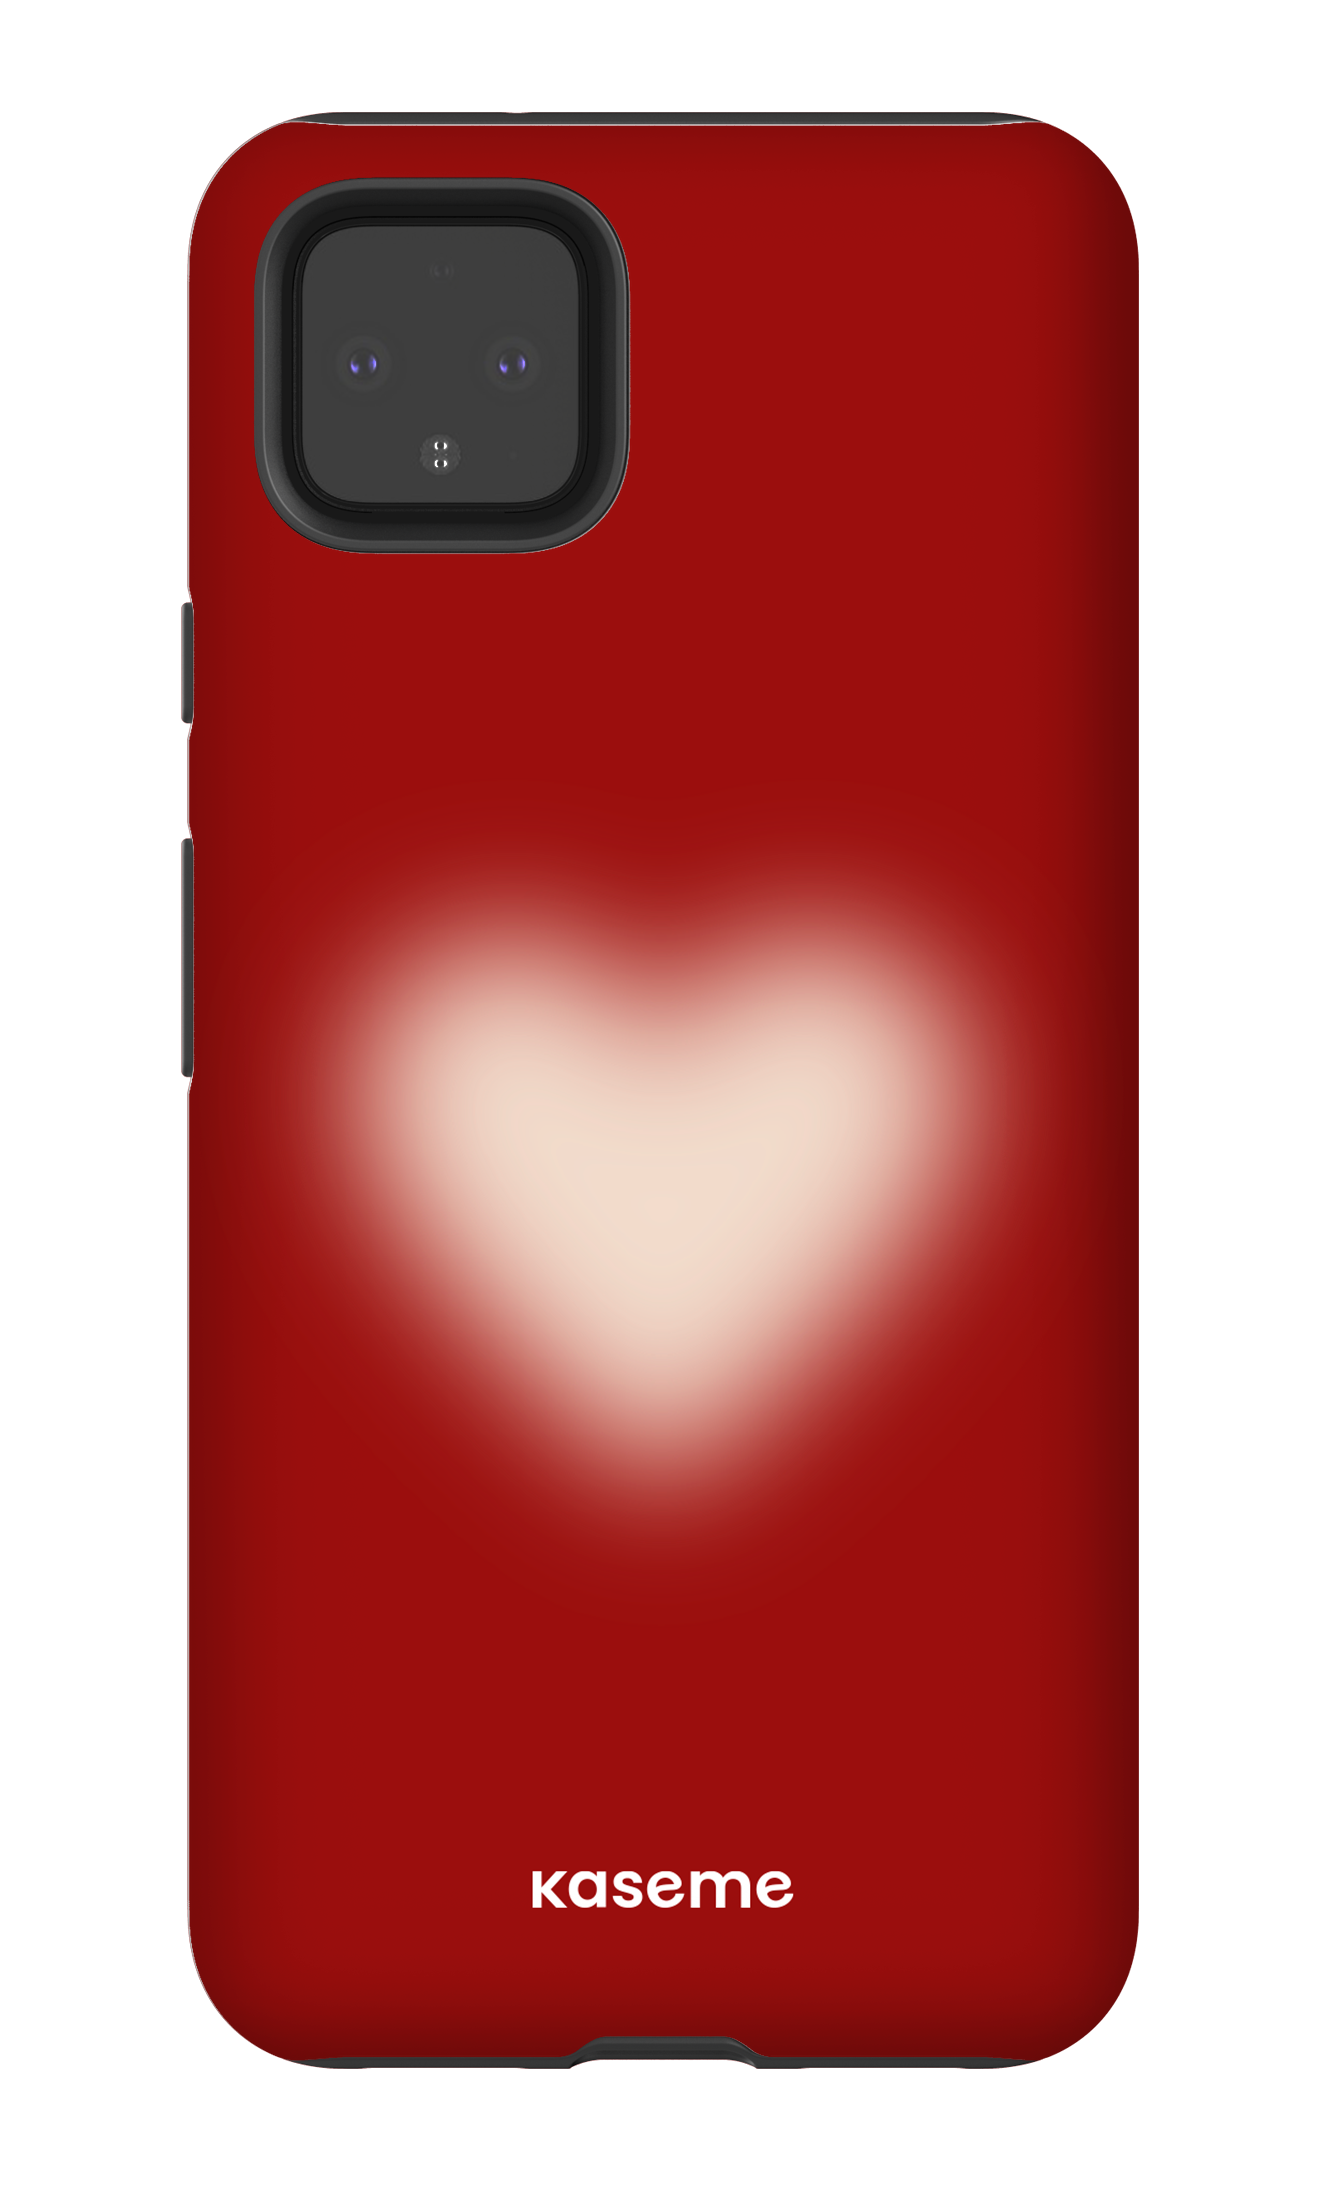 Sweetheart Red - Google Pixel 4 XL